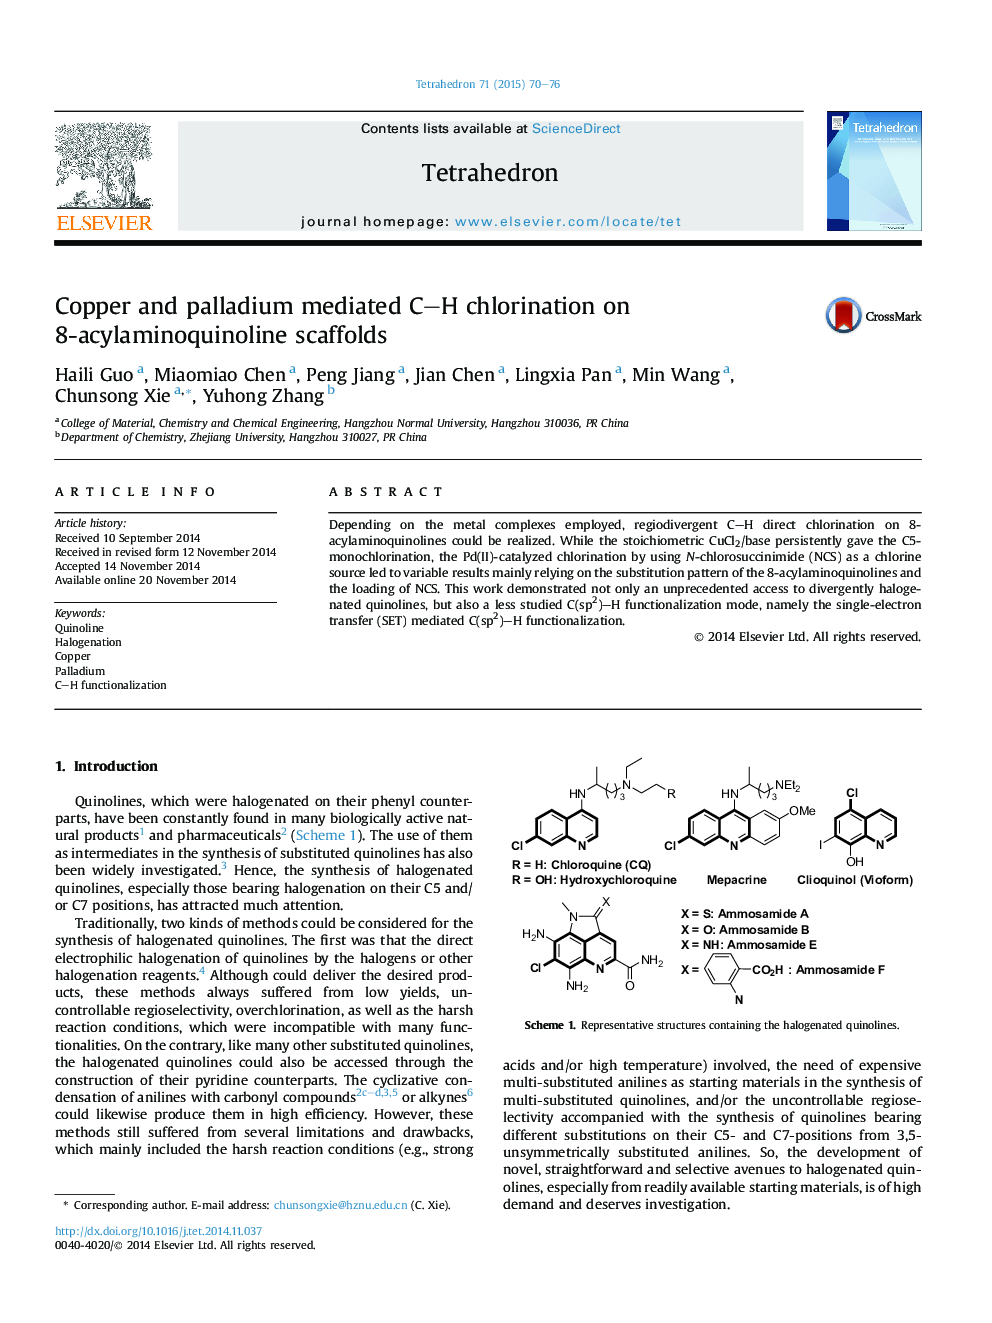 Copper and palladium mediated C-H chlorination on 8-acylaminoquinoline scaffolds